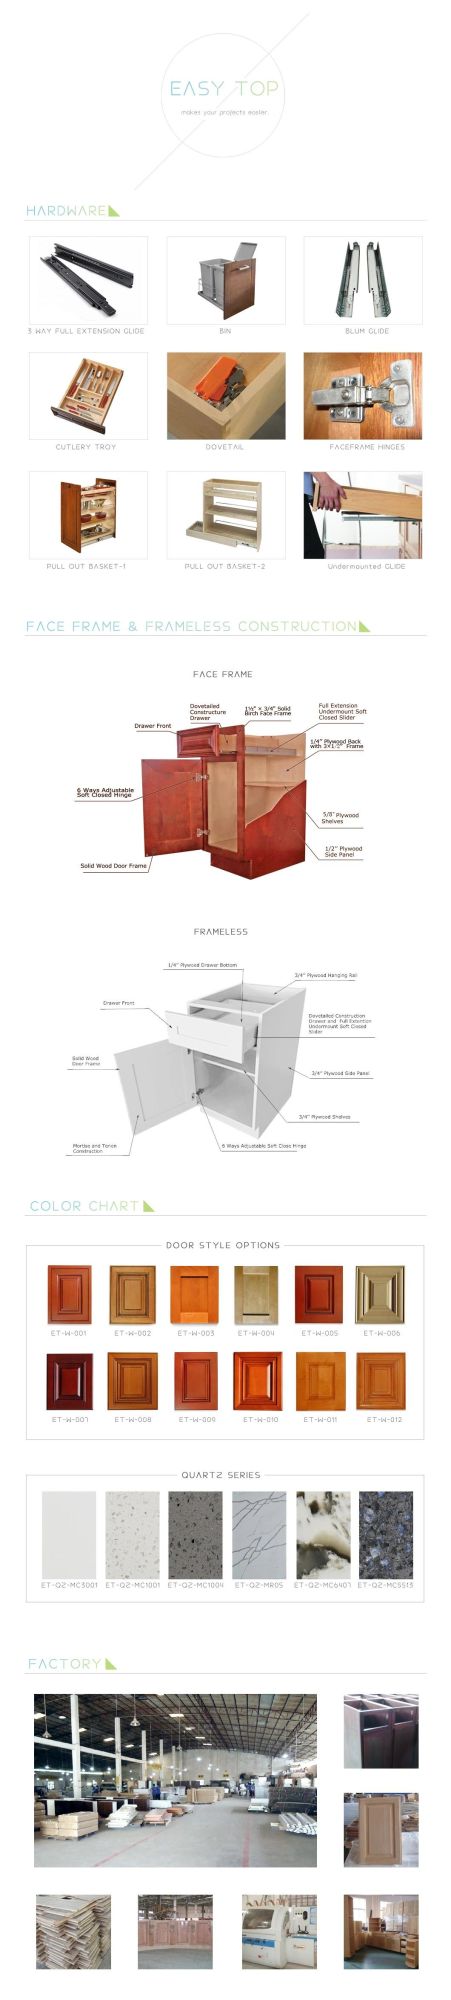 Villa Project Furniture Modular Solid Wood Green Kitchen Cabinet Guangzhou